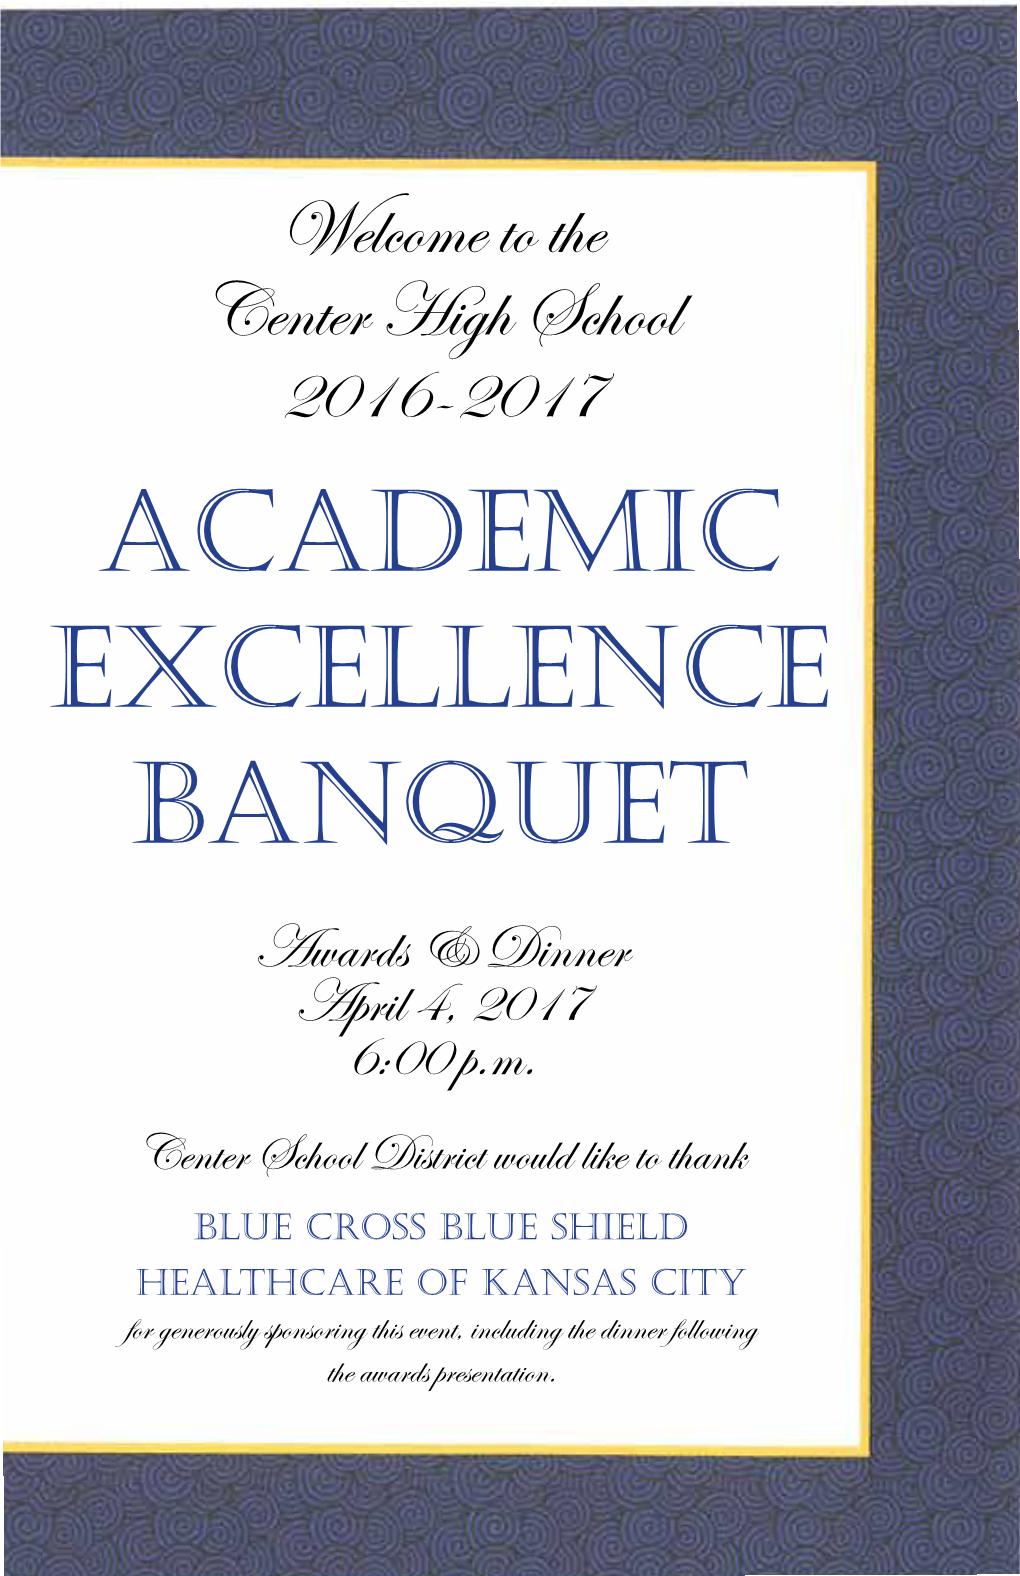 Academic Excellence Banquet Awards & Dinner April 4, 2017 6:00 P.M